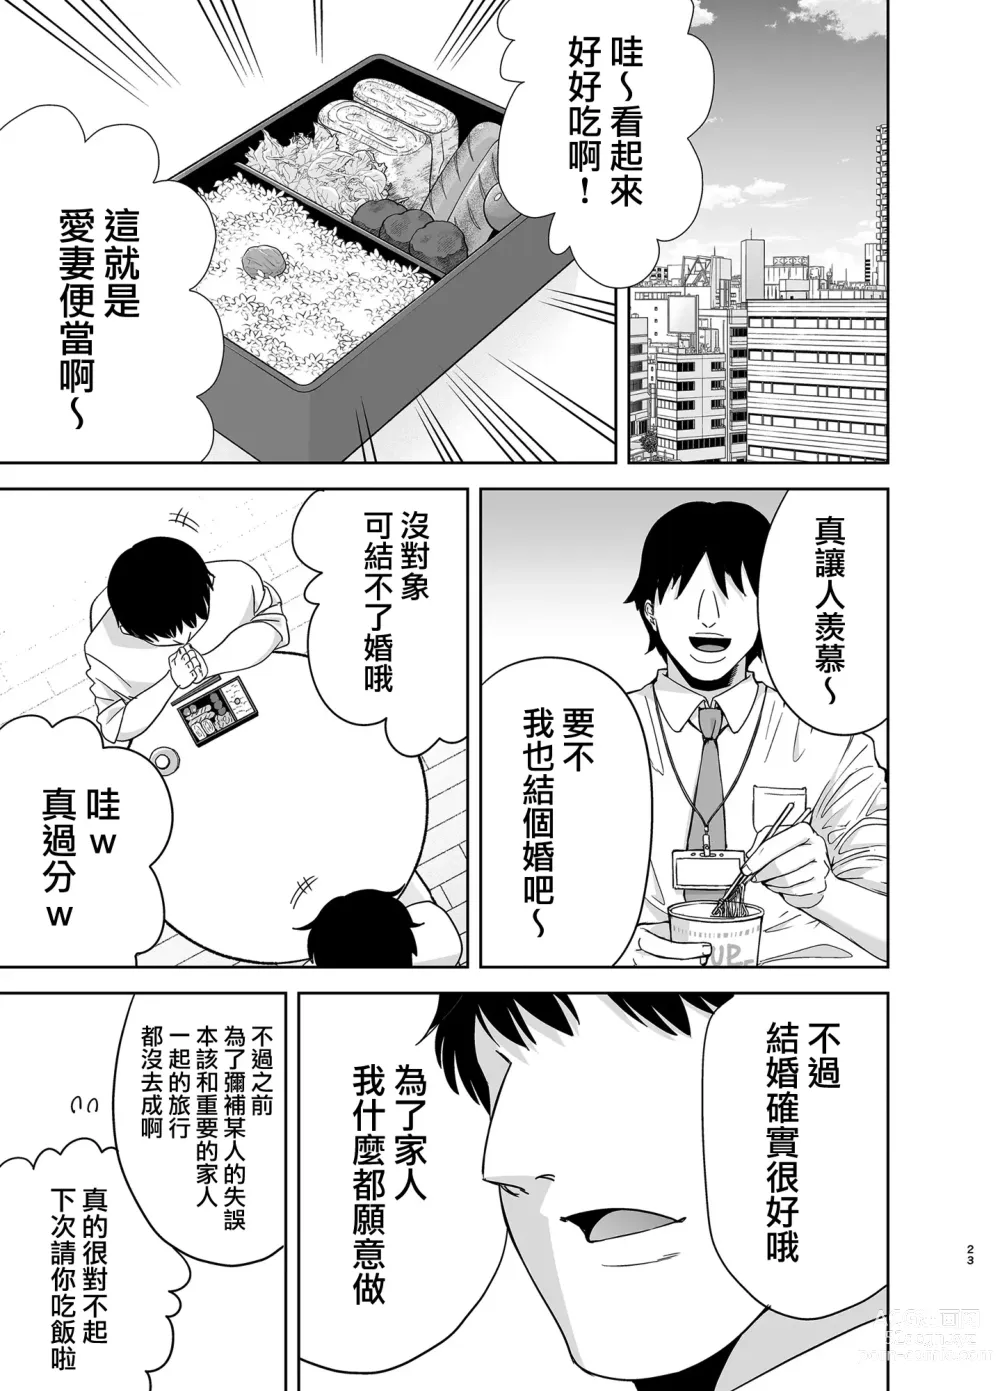 Page 22 of doujinshi sdasd